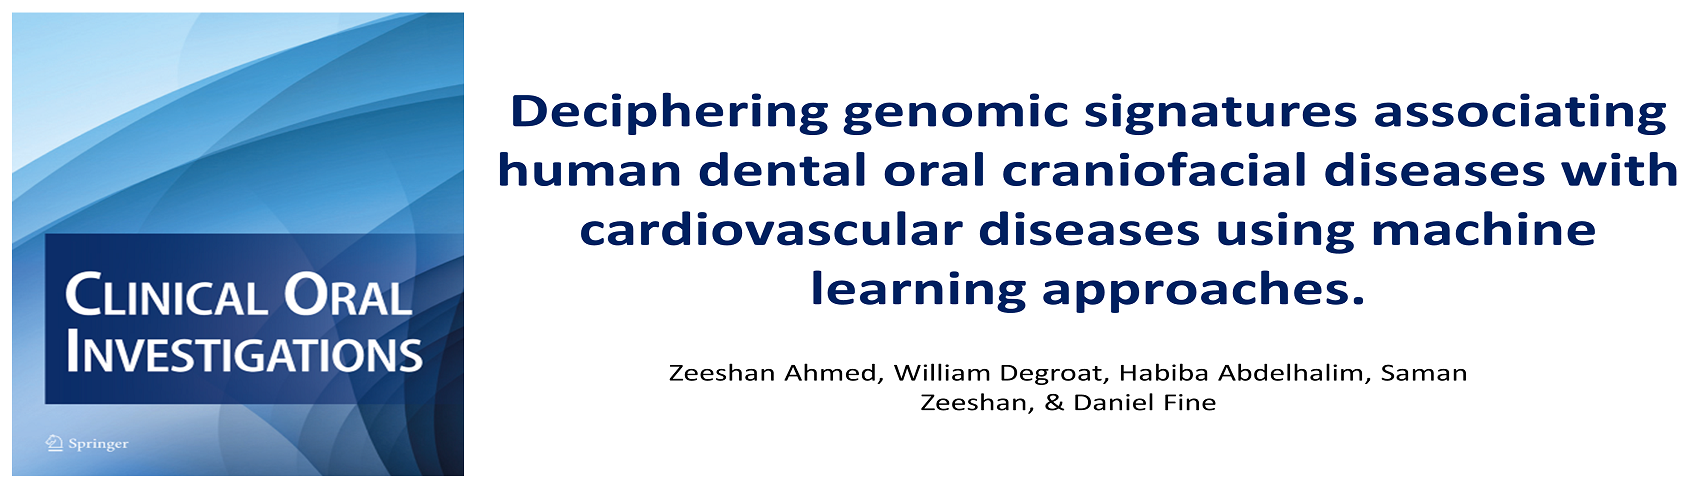 Deciphering genomic signatures associating DOC with CVD